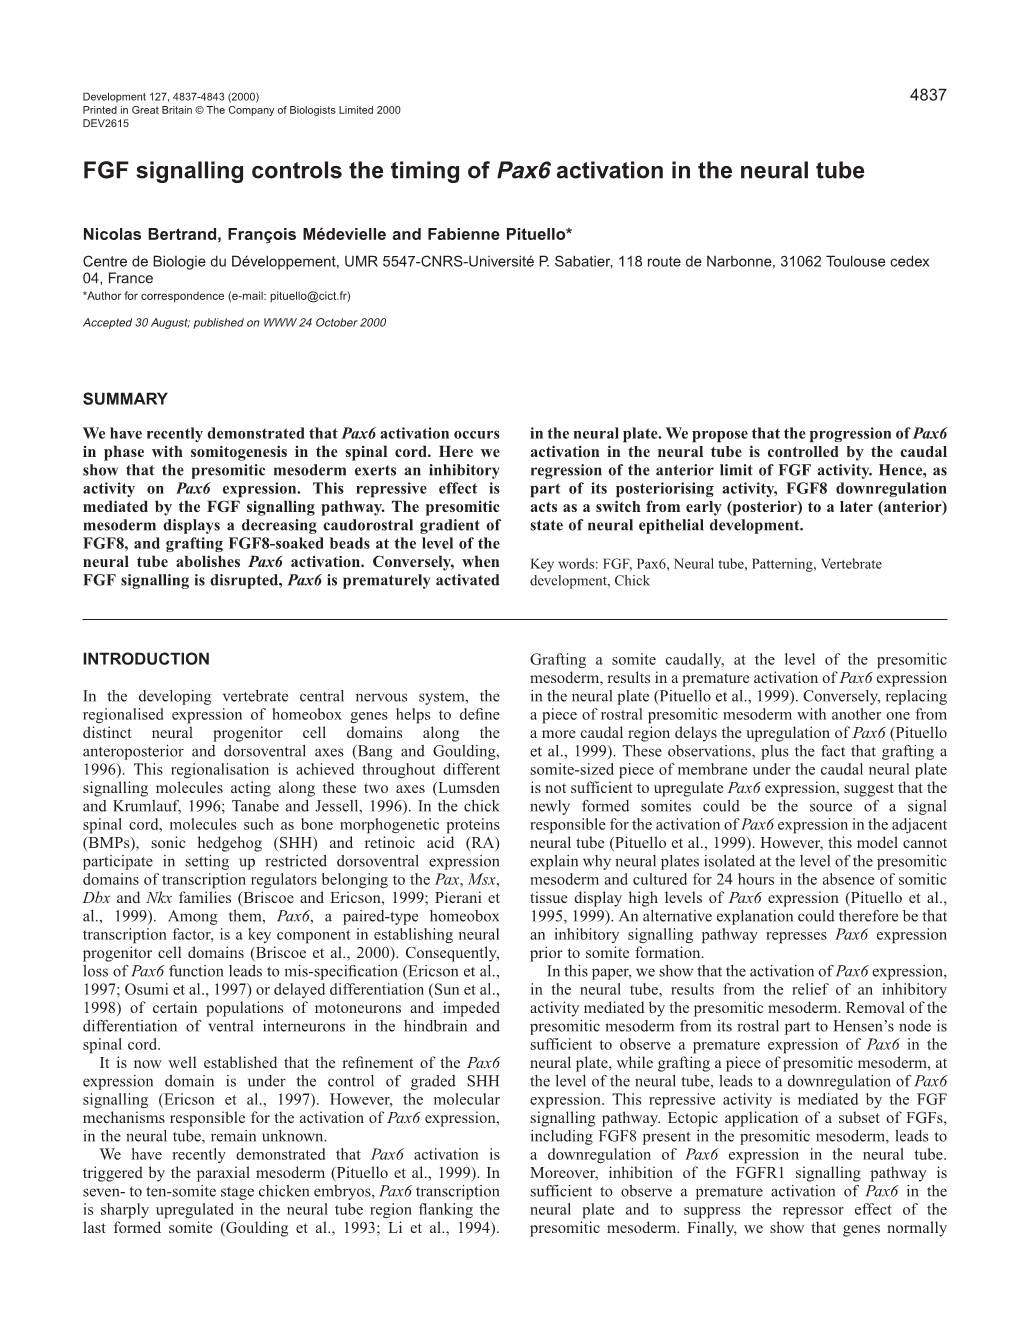 FGF Signalling Controls Pax6 Activation 4839